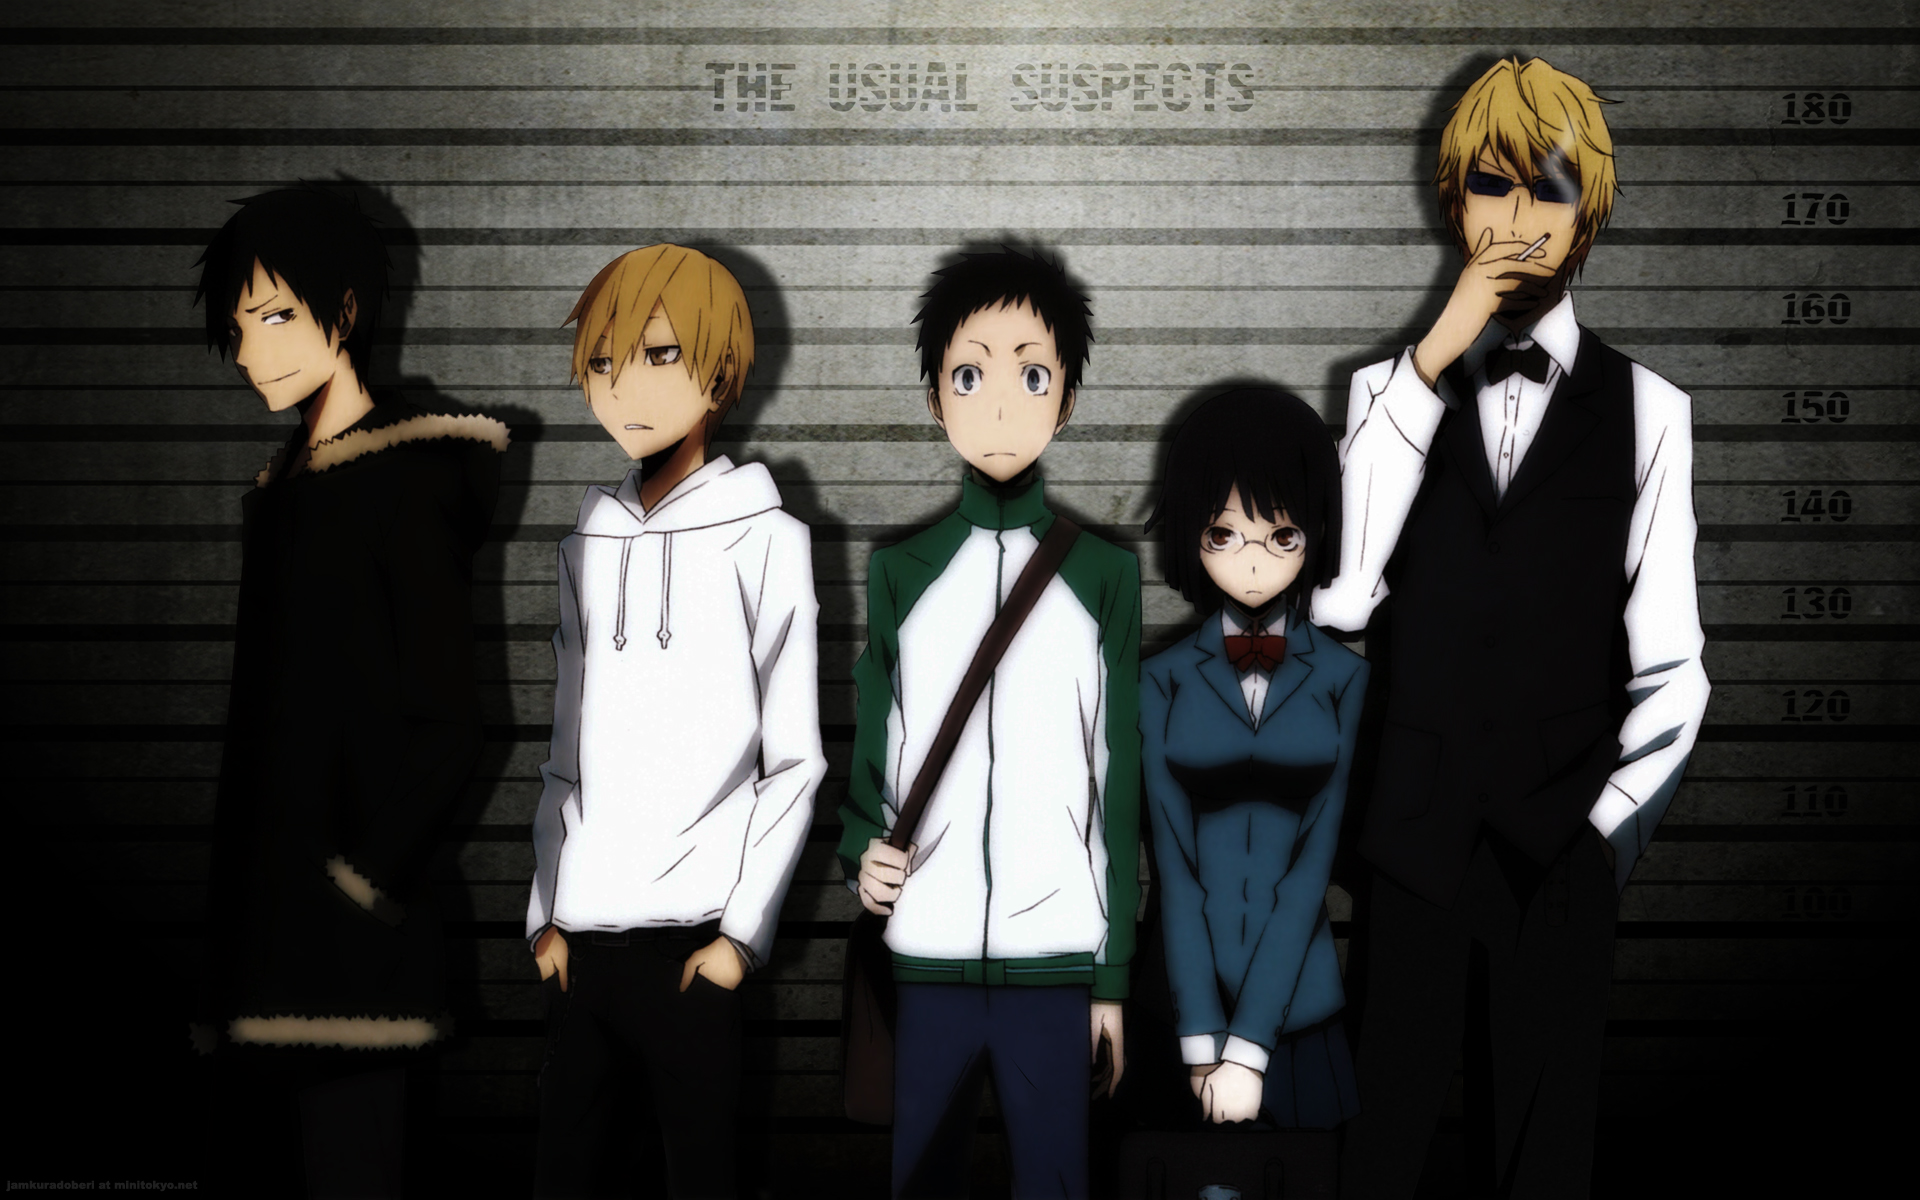 Durarara!! anime characters Shizuo, Izaya, Mikado, Anri, and Masaomi in a dynamic wallpaper.